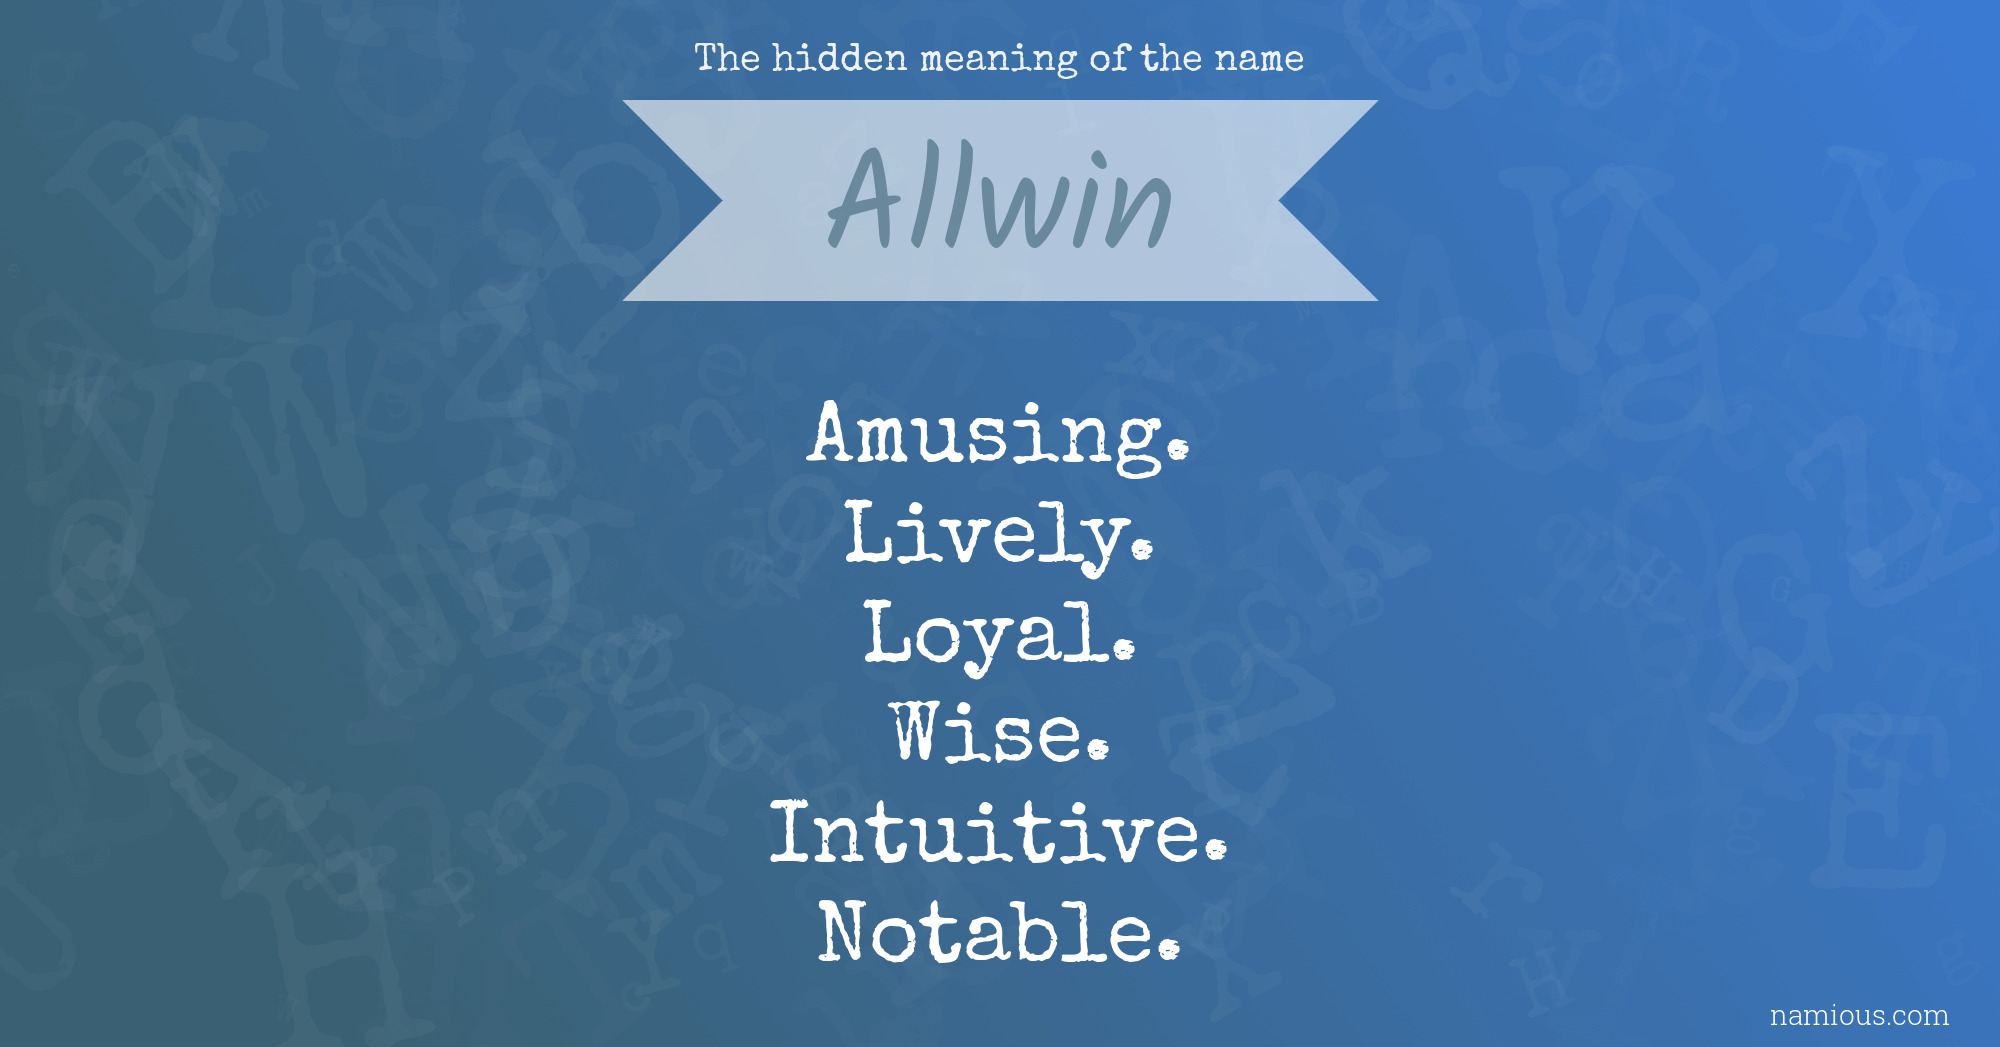 Allwins